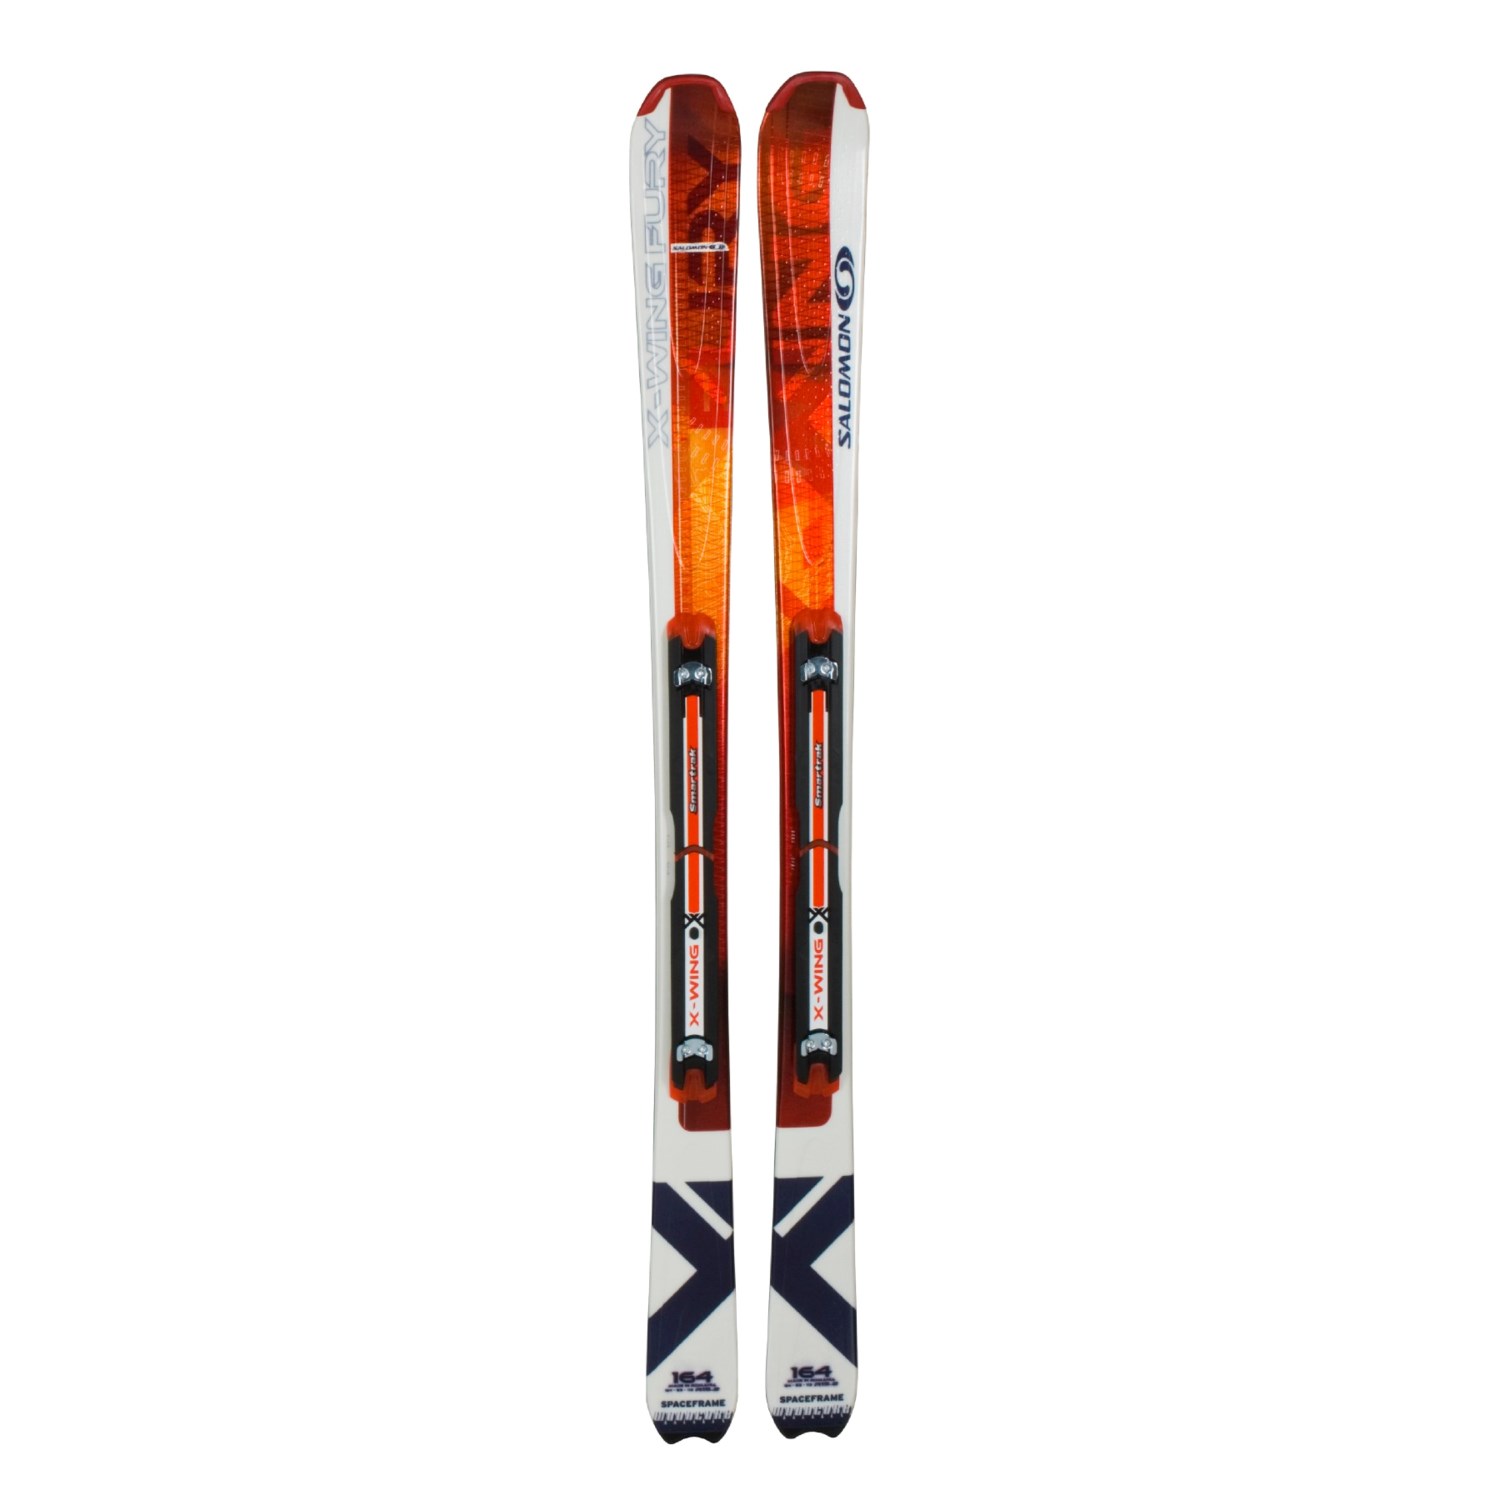 Salomon XW Fury Alpine Skis with Z12 TI B90 Bindings 83992 - Save 60%